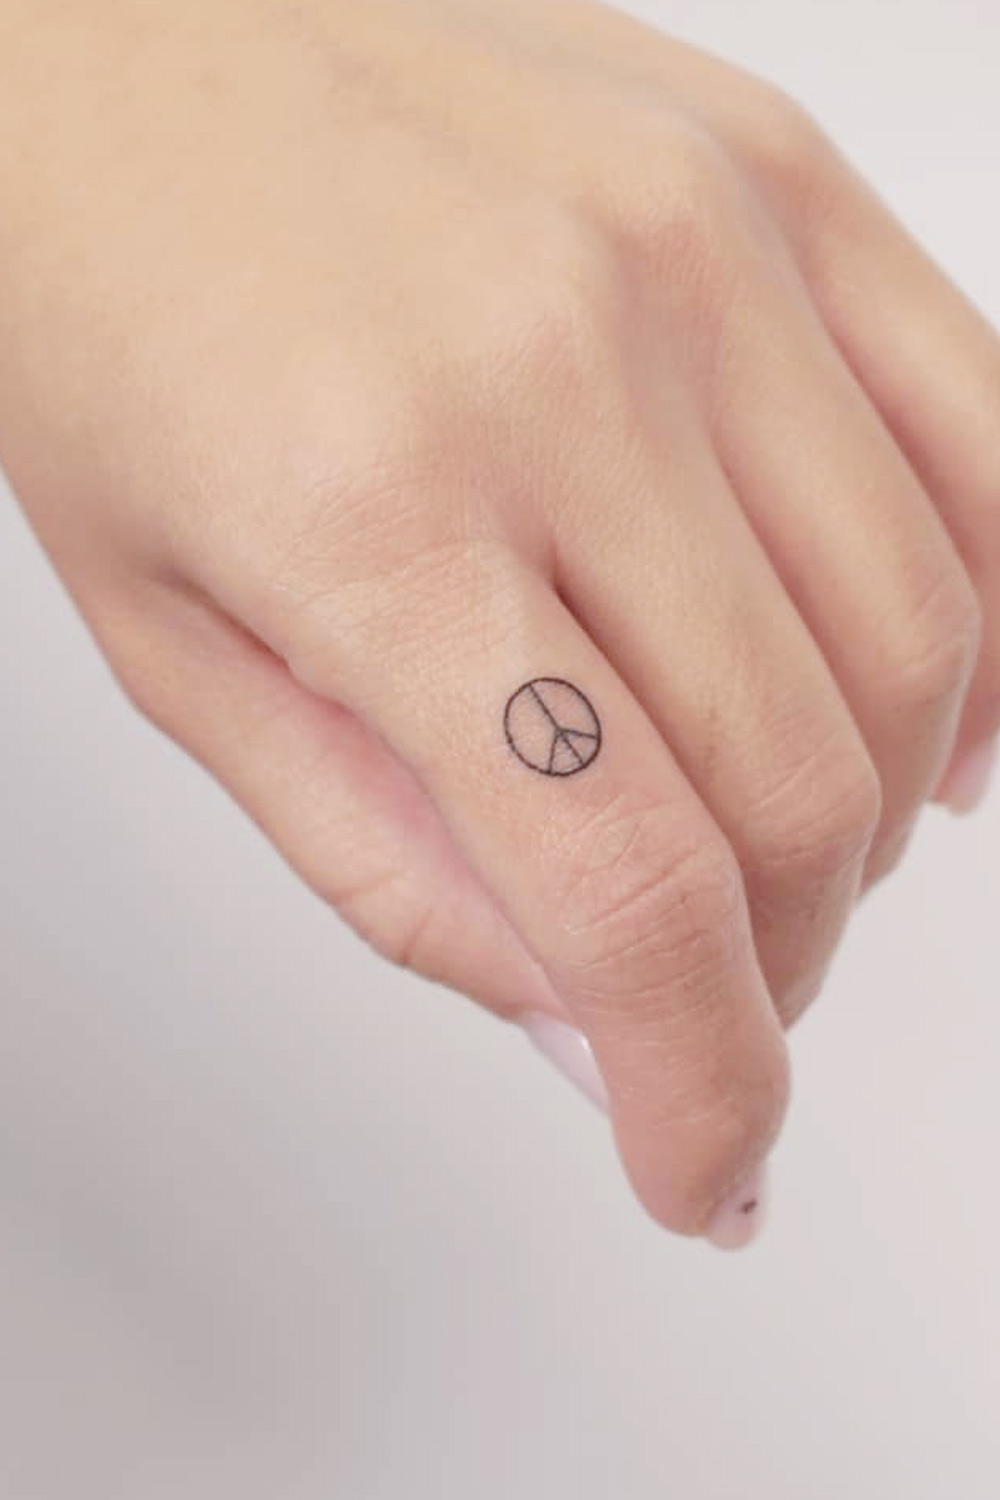 Peace finger tattoo #peacesign #tattoobyalex #mountainside… | Flickr